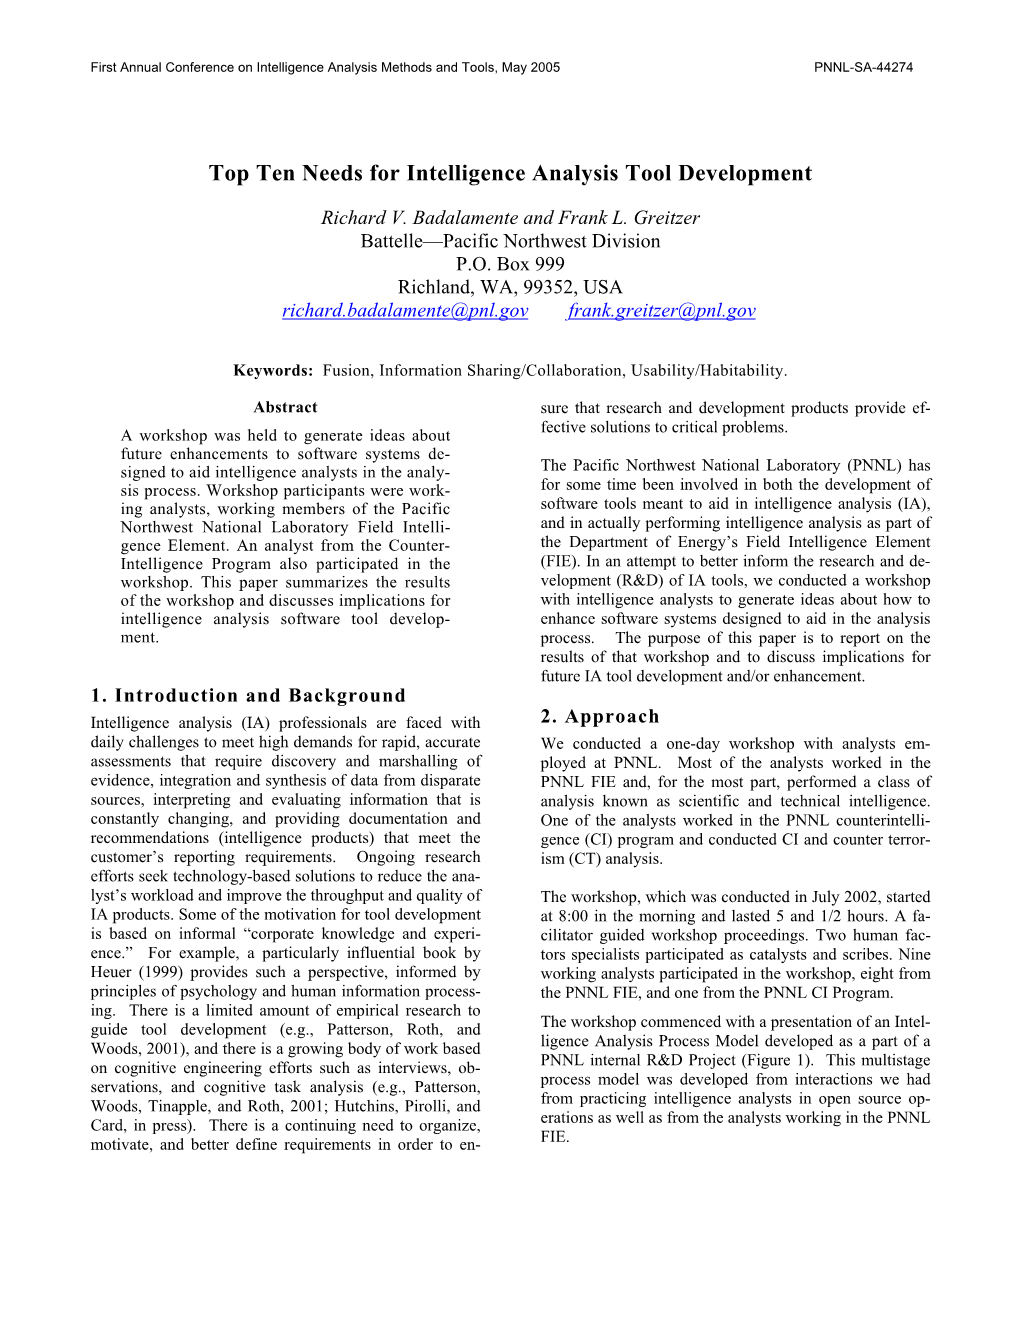 Top Ten Needs for Intelligence Analysis Tool Development